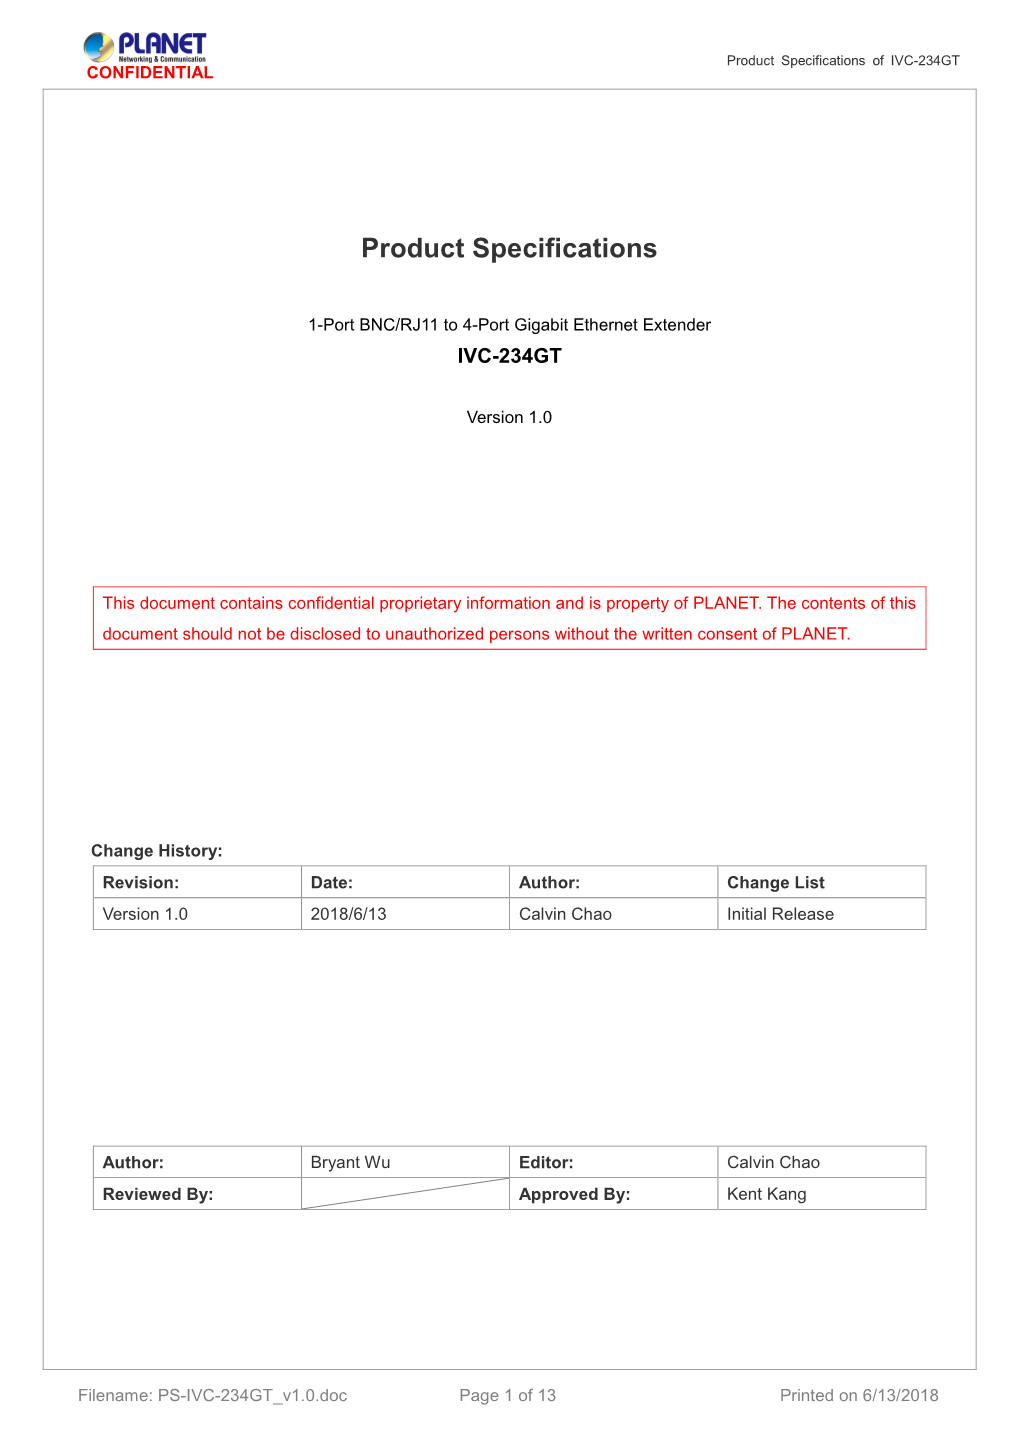 Product Specification of Gigabit Ethernet Extender